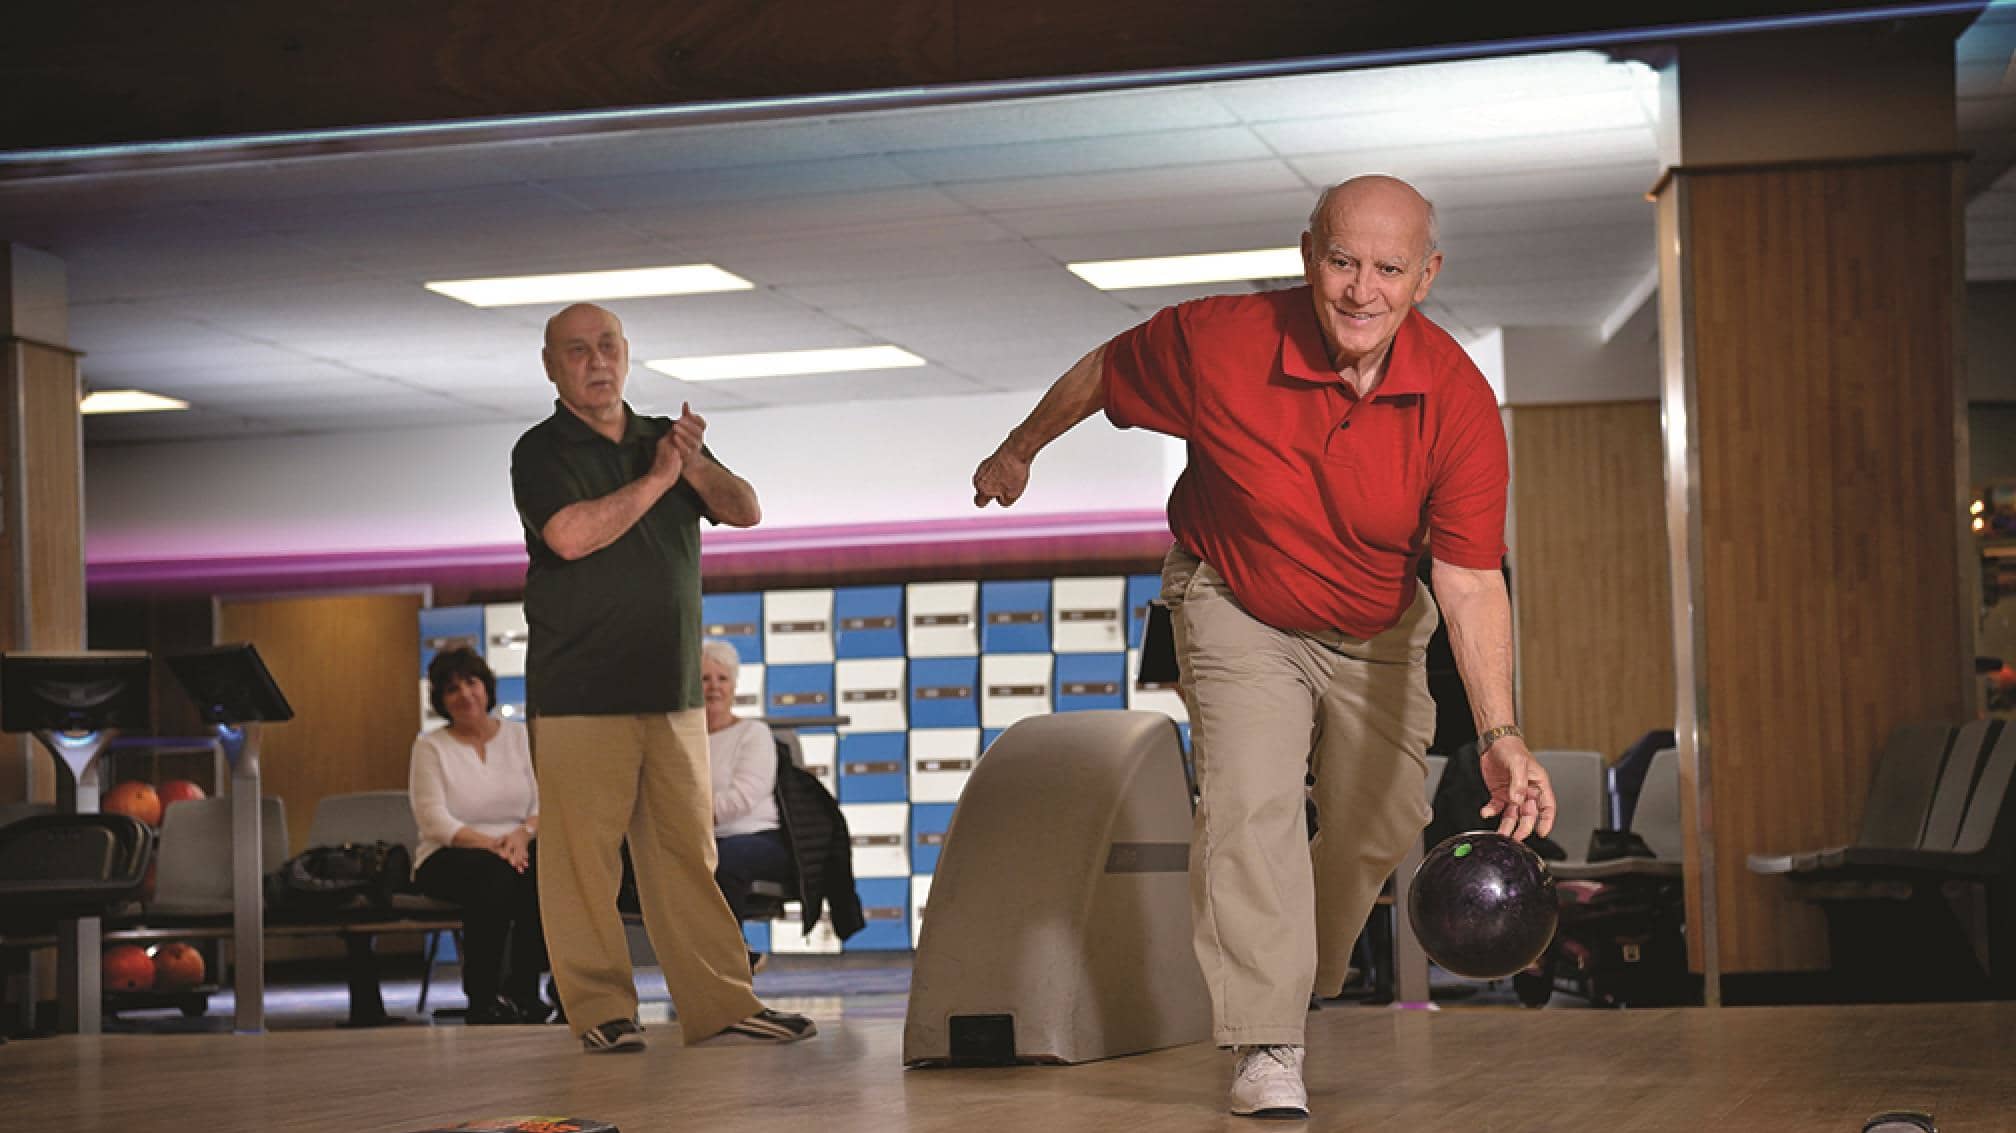 Cancer survivor bowling